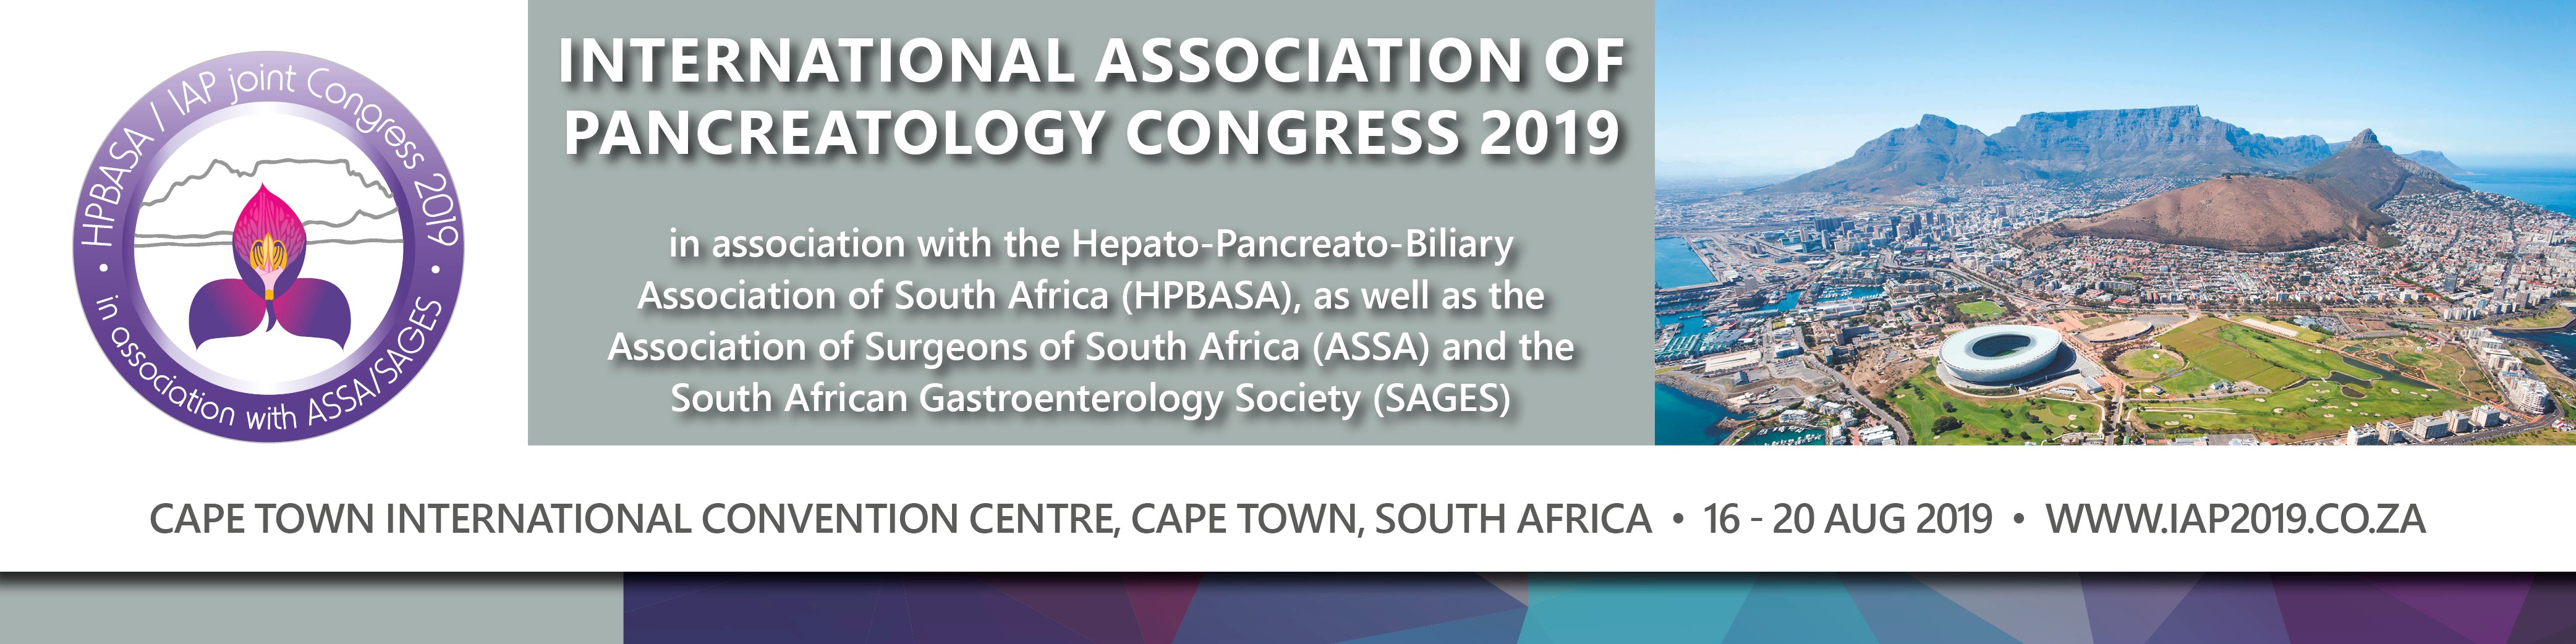 International Association Of Pancreatology Congress 2019